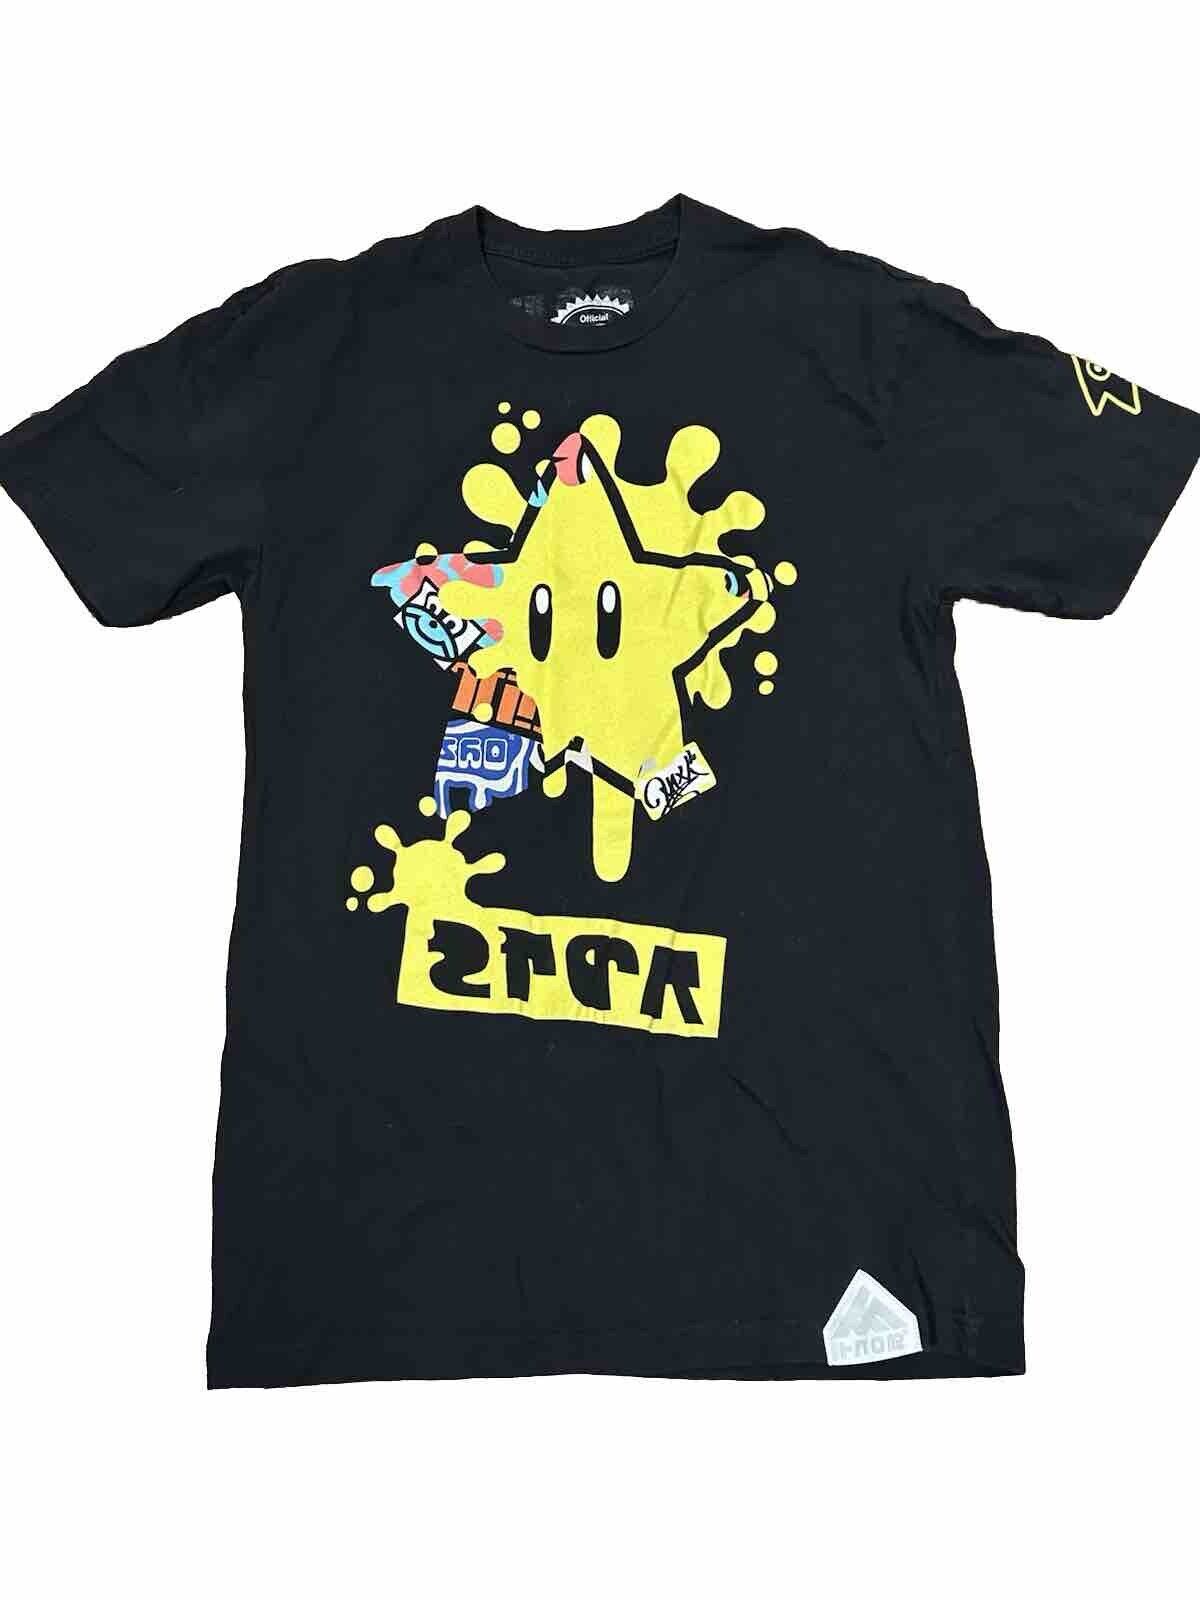 Splatoon 2 Festival T-shirt Super Star Super Mario Bros. 35th Anniversary Size S